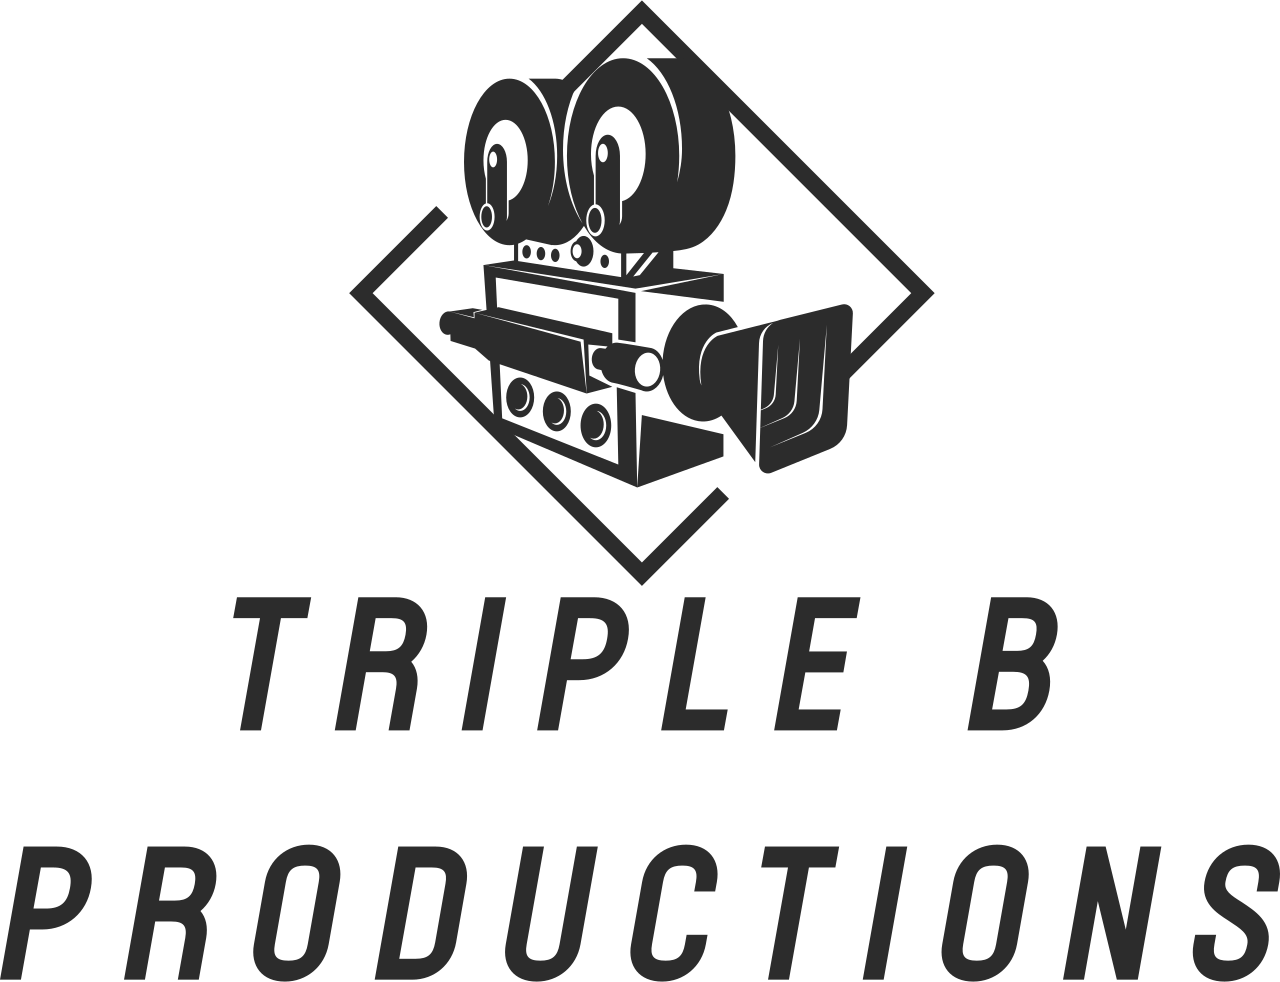 Triple B
Productions's logo